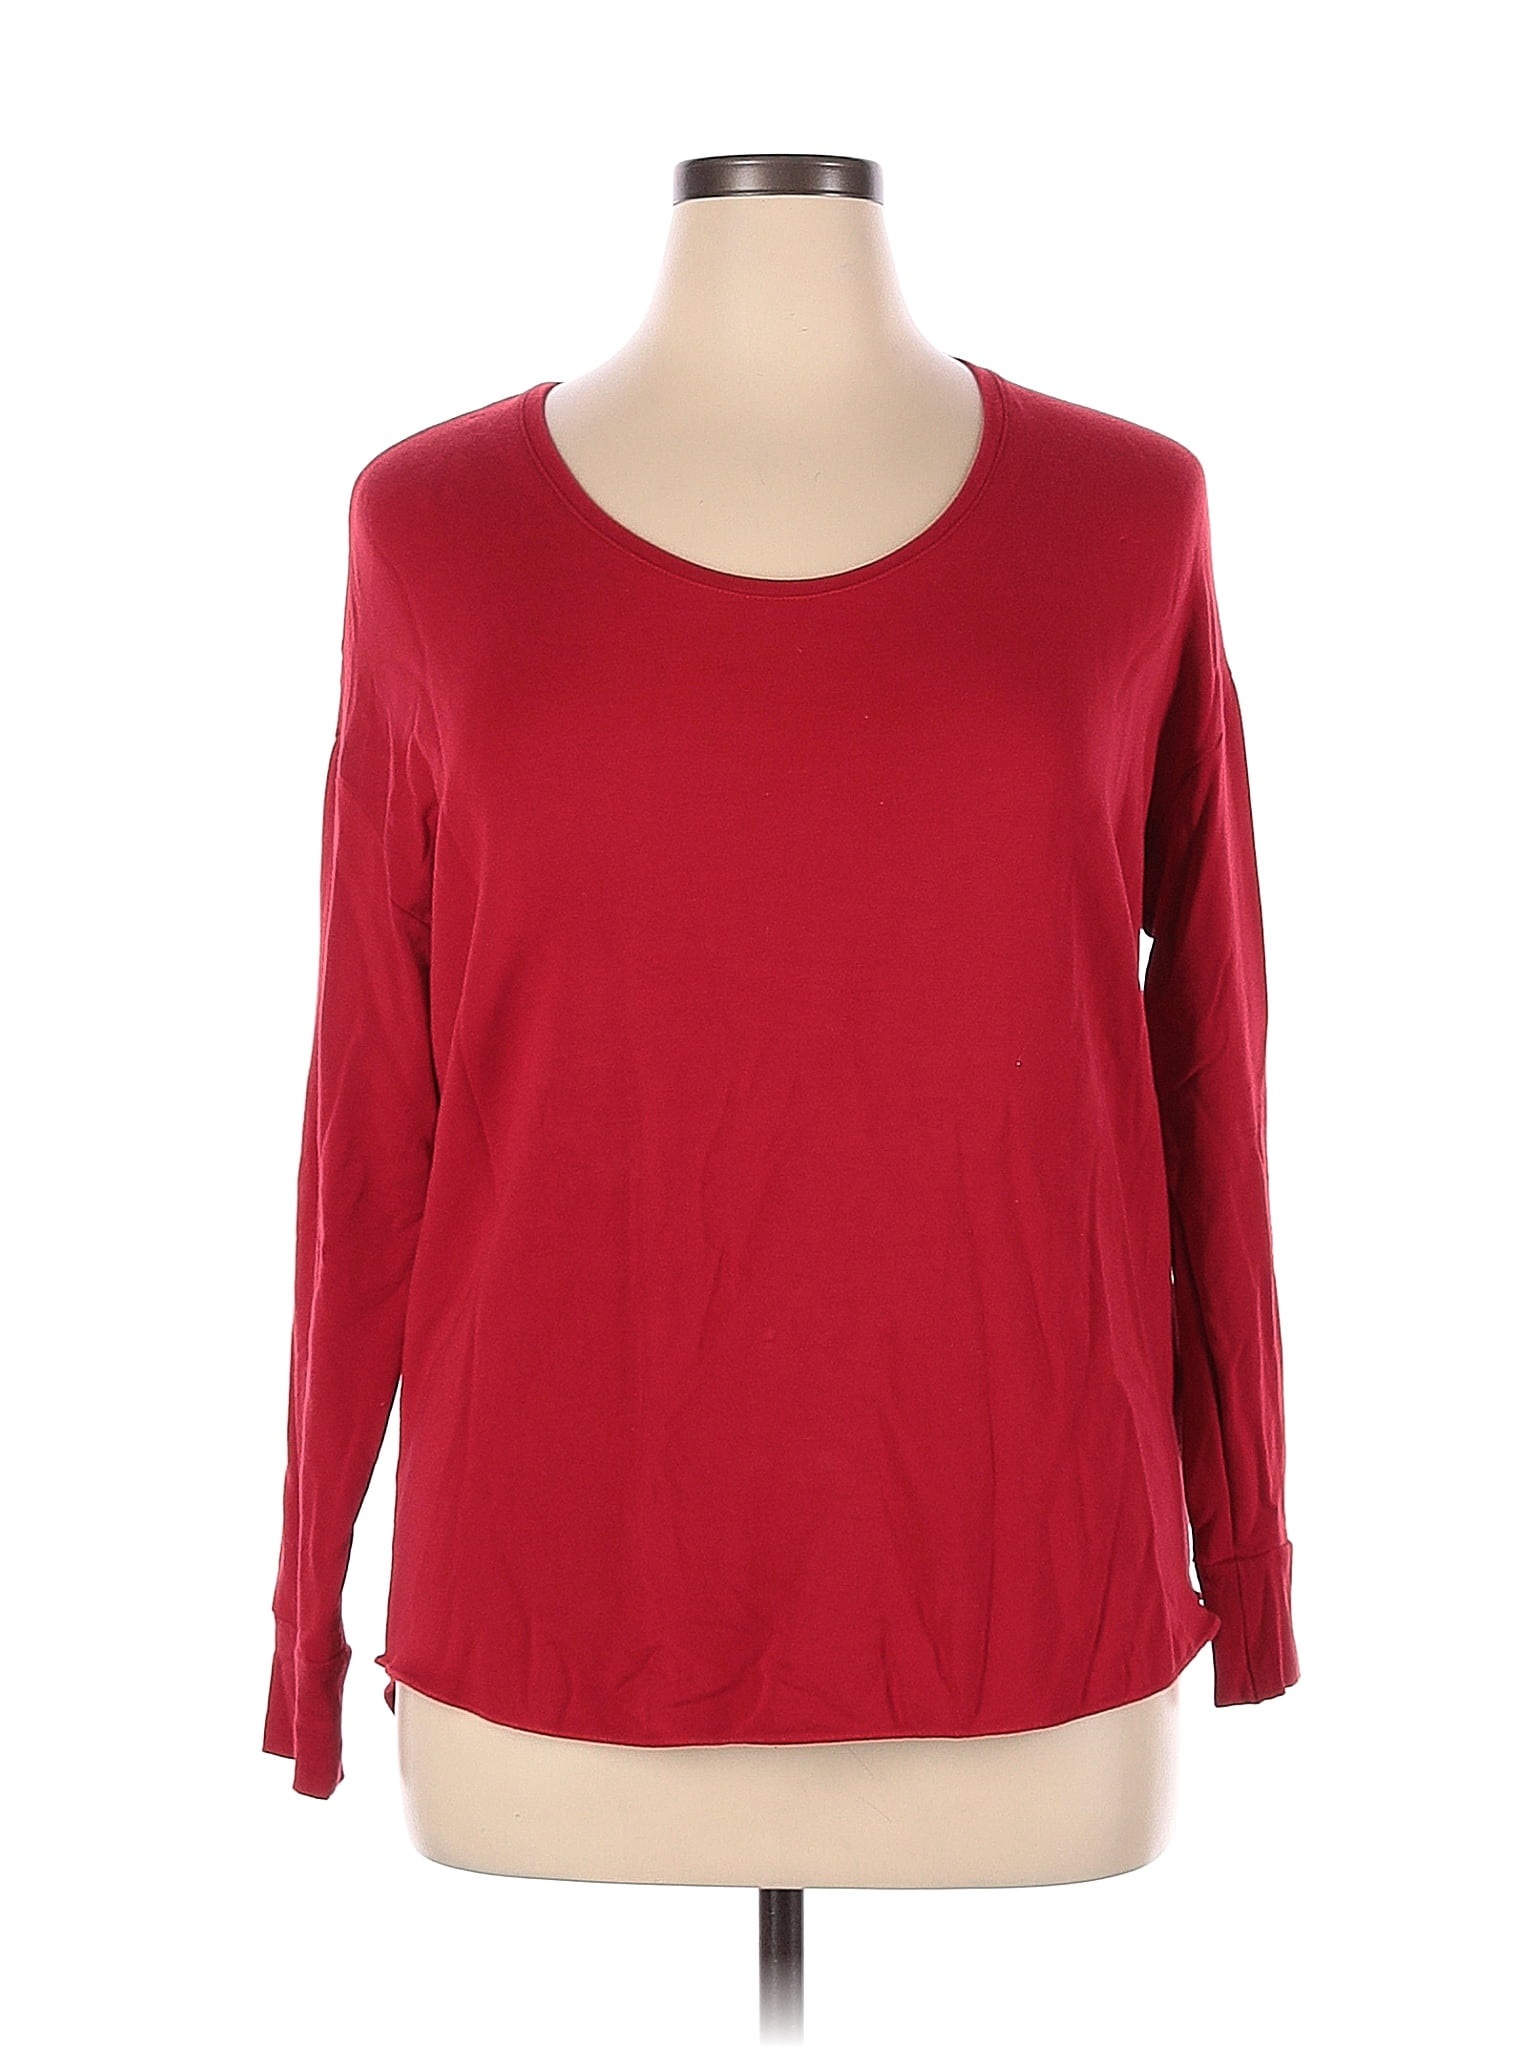 Majestic Filatures Solid Red Sweatshirt Size Lg (3) - 82% off | thredUP